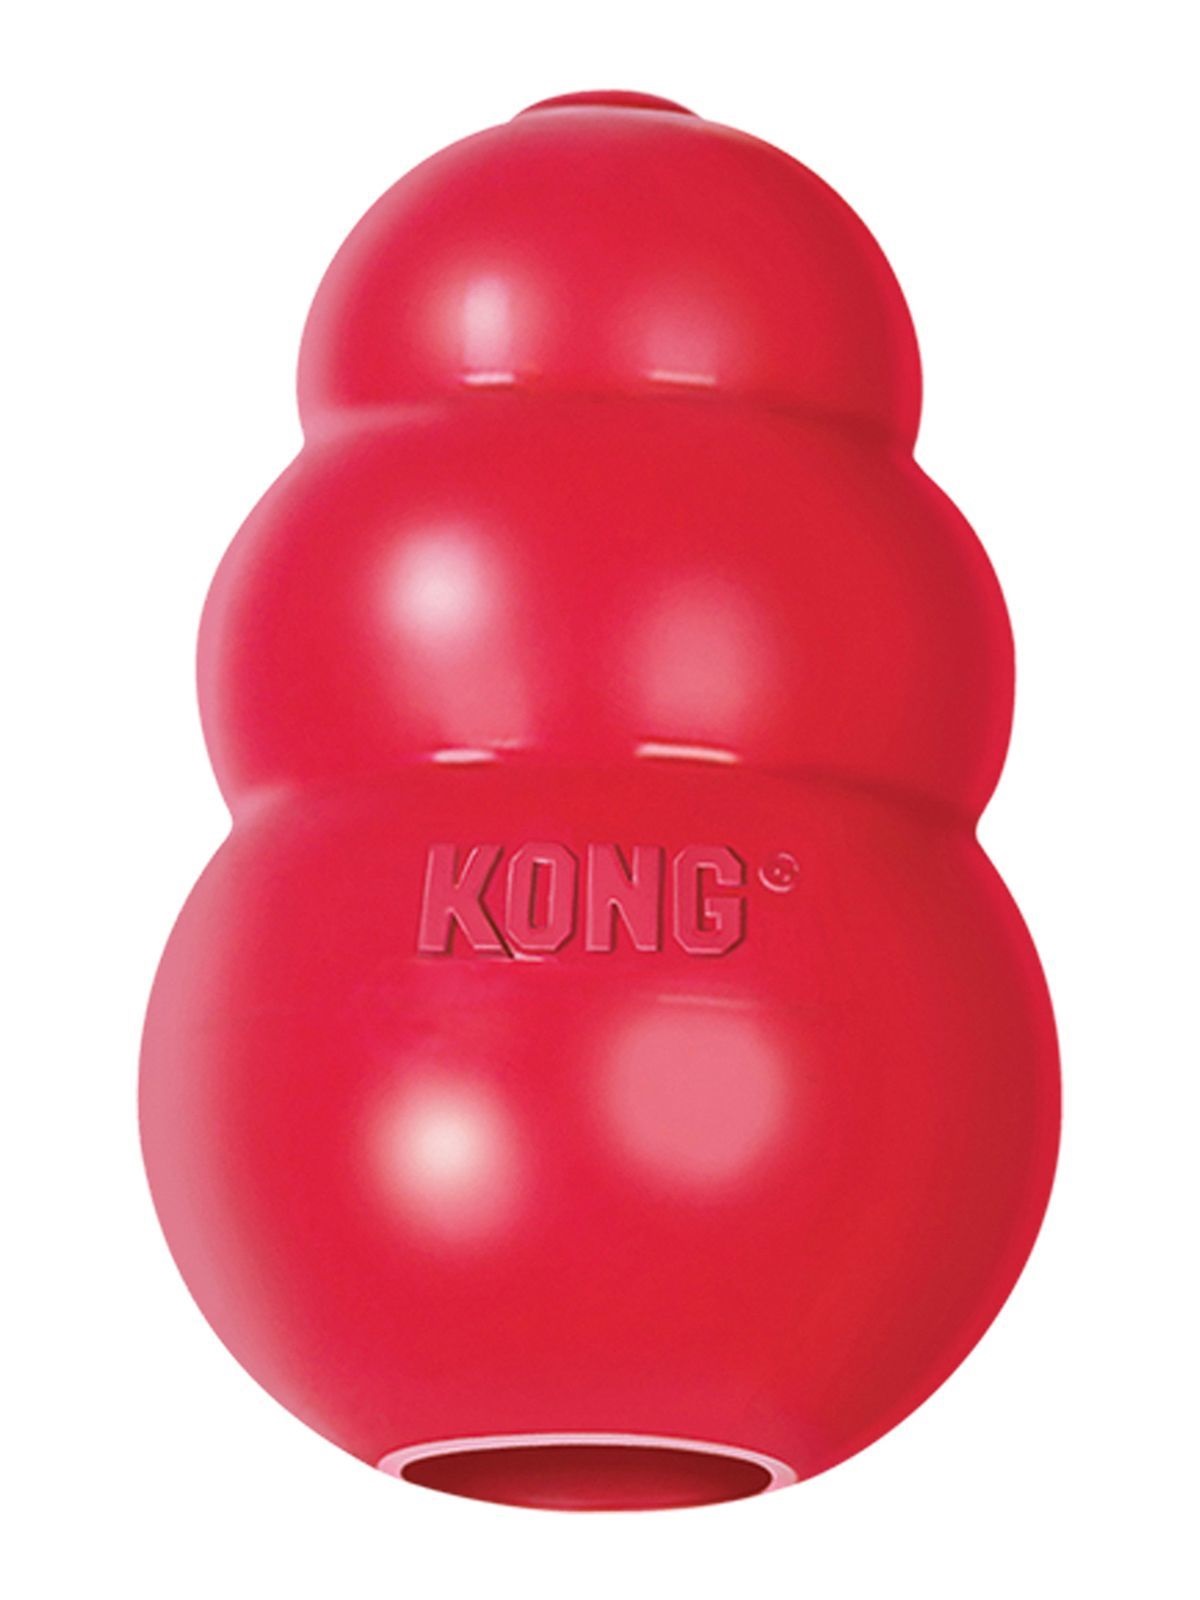 Игрушка для собак Kong classic р.m средняя 8х6см